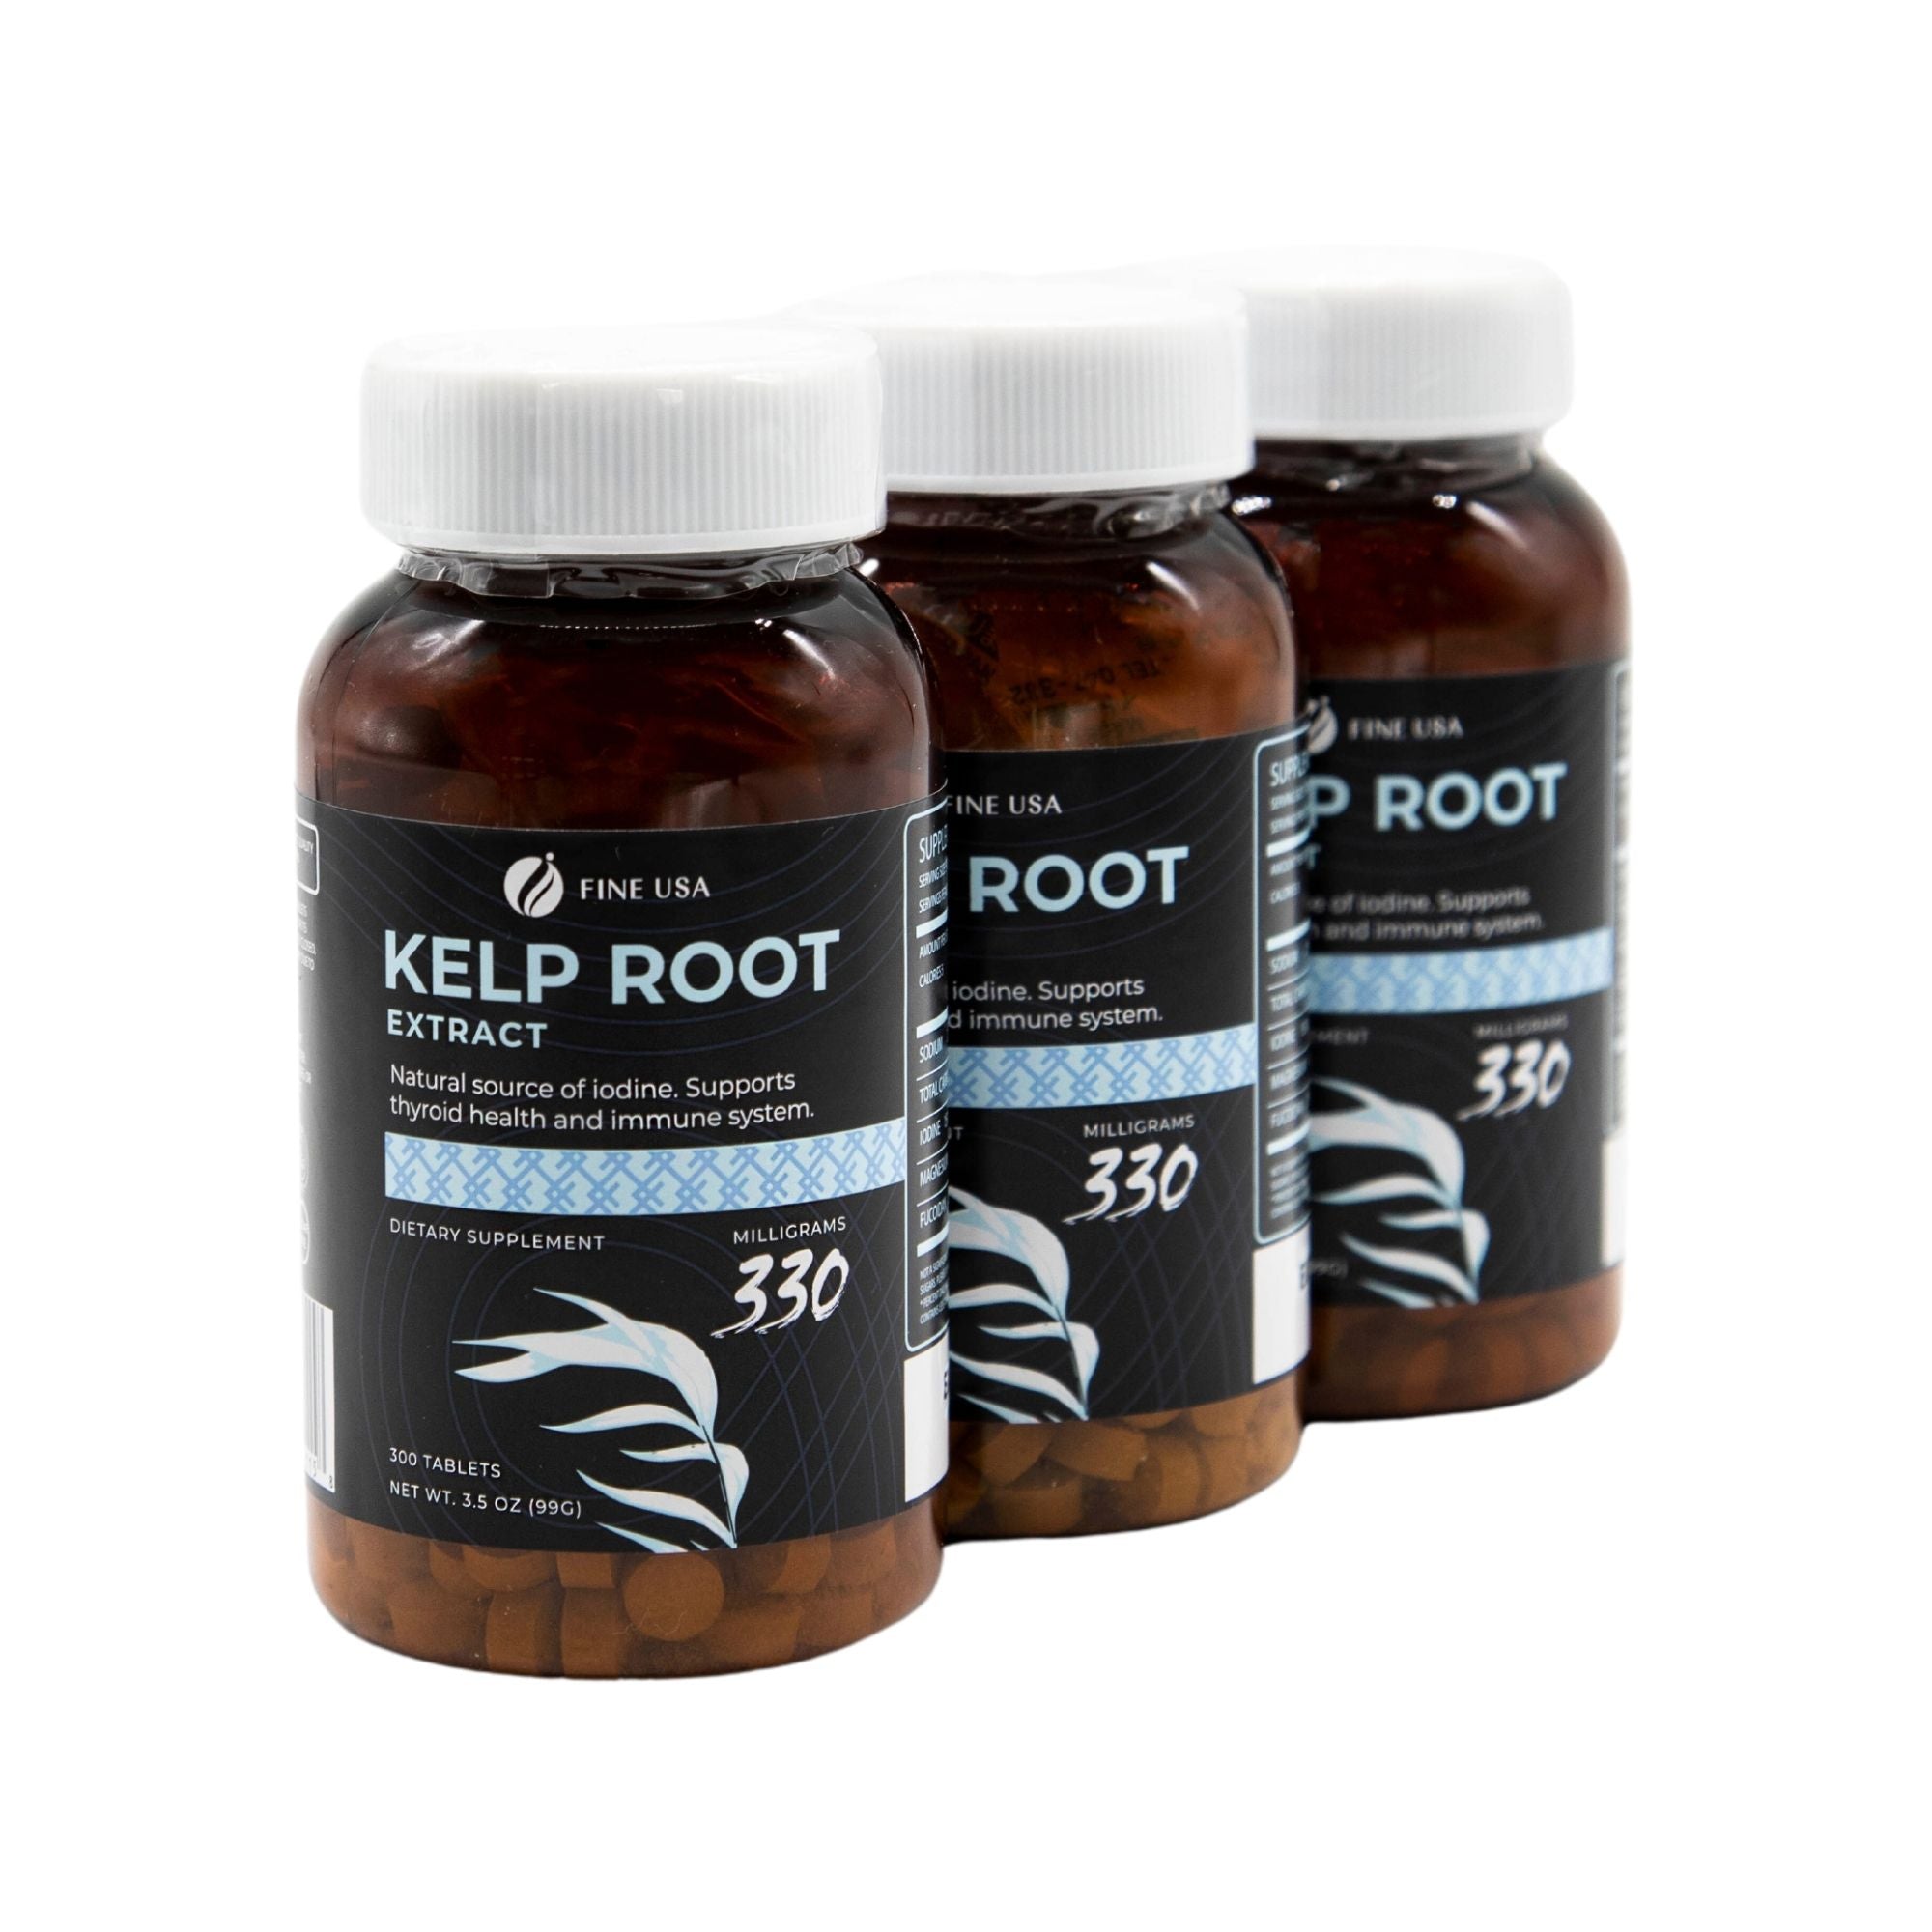 Kelp Root Extract